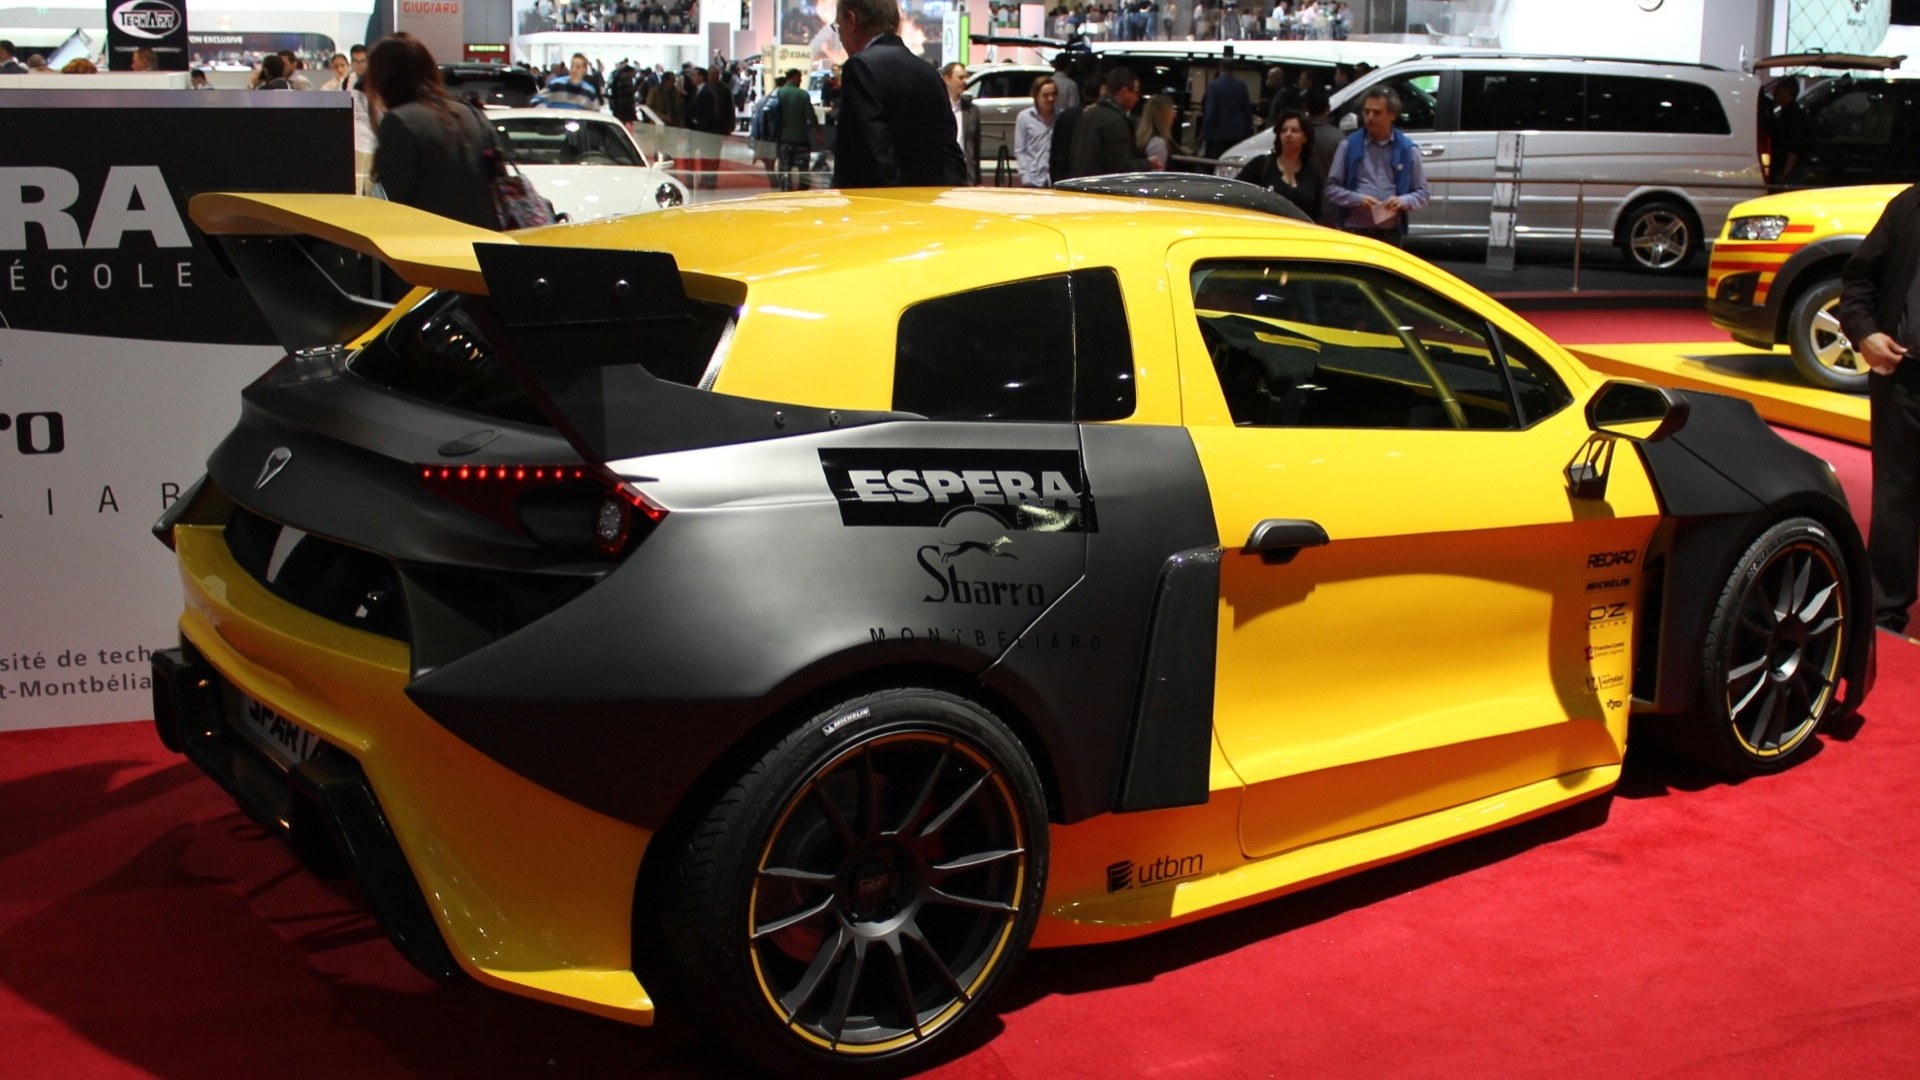 Espera Sbarro Sparta Concept  -  2014 Geneva Auto Show live photos